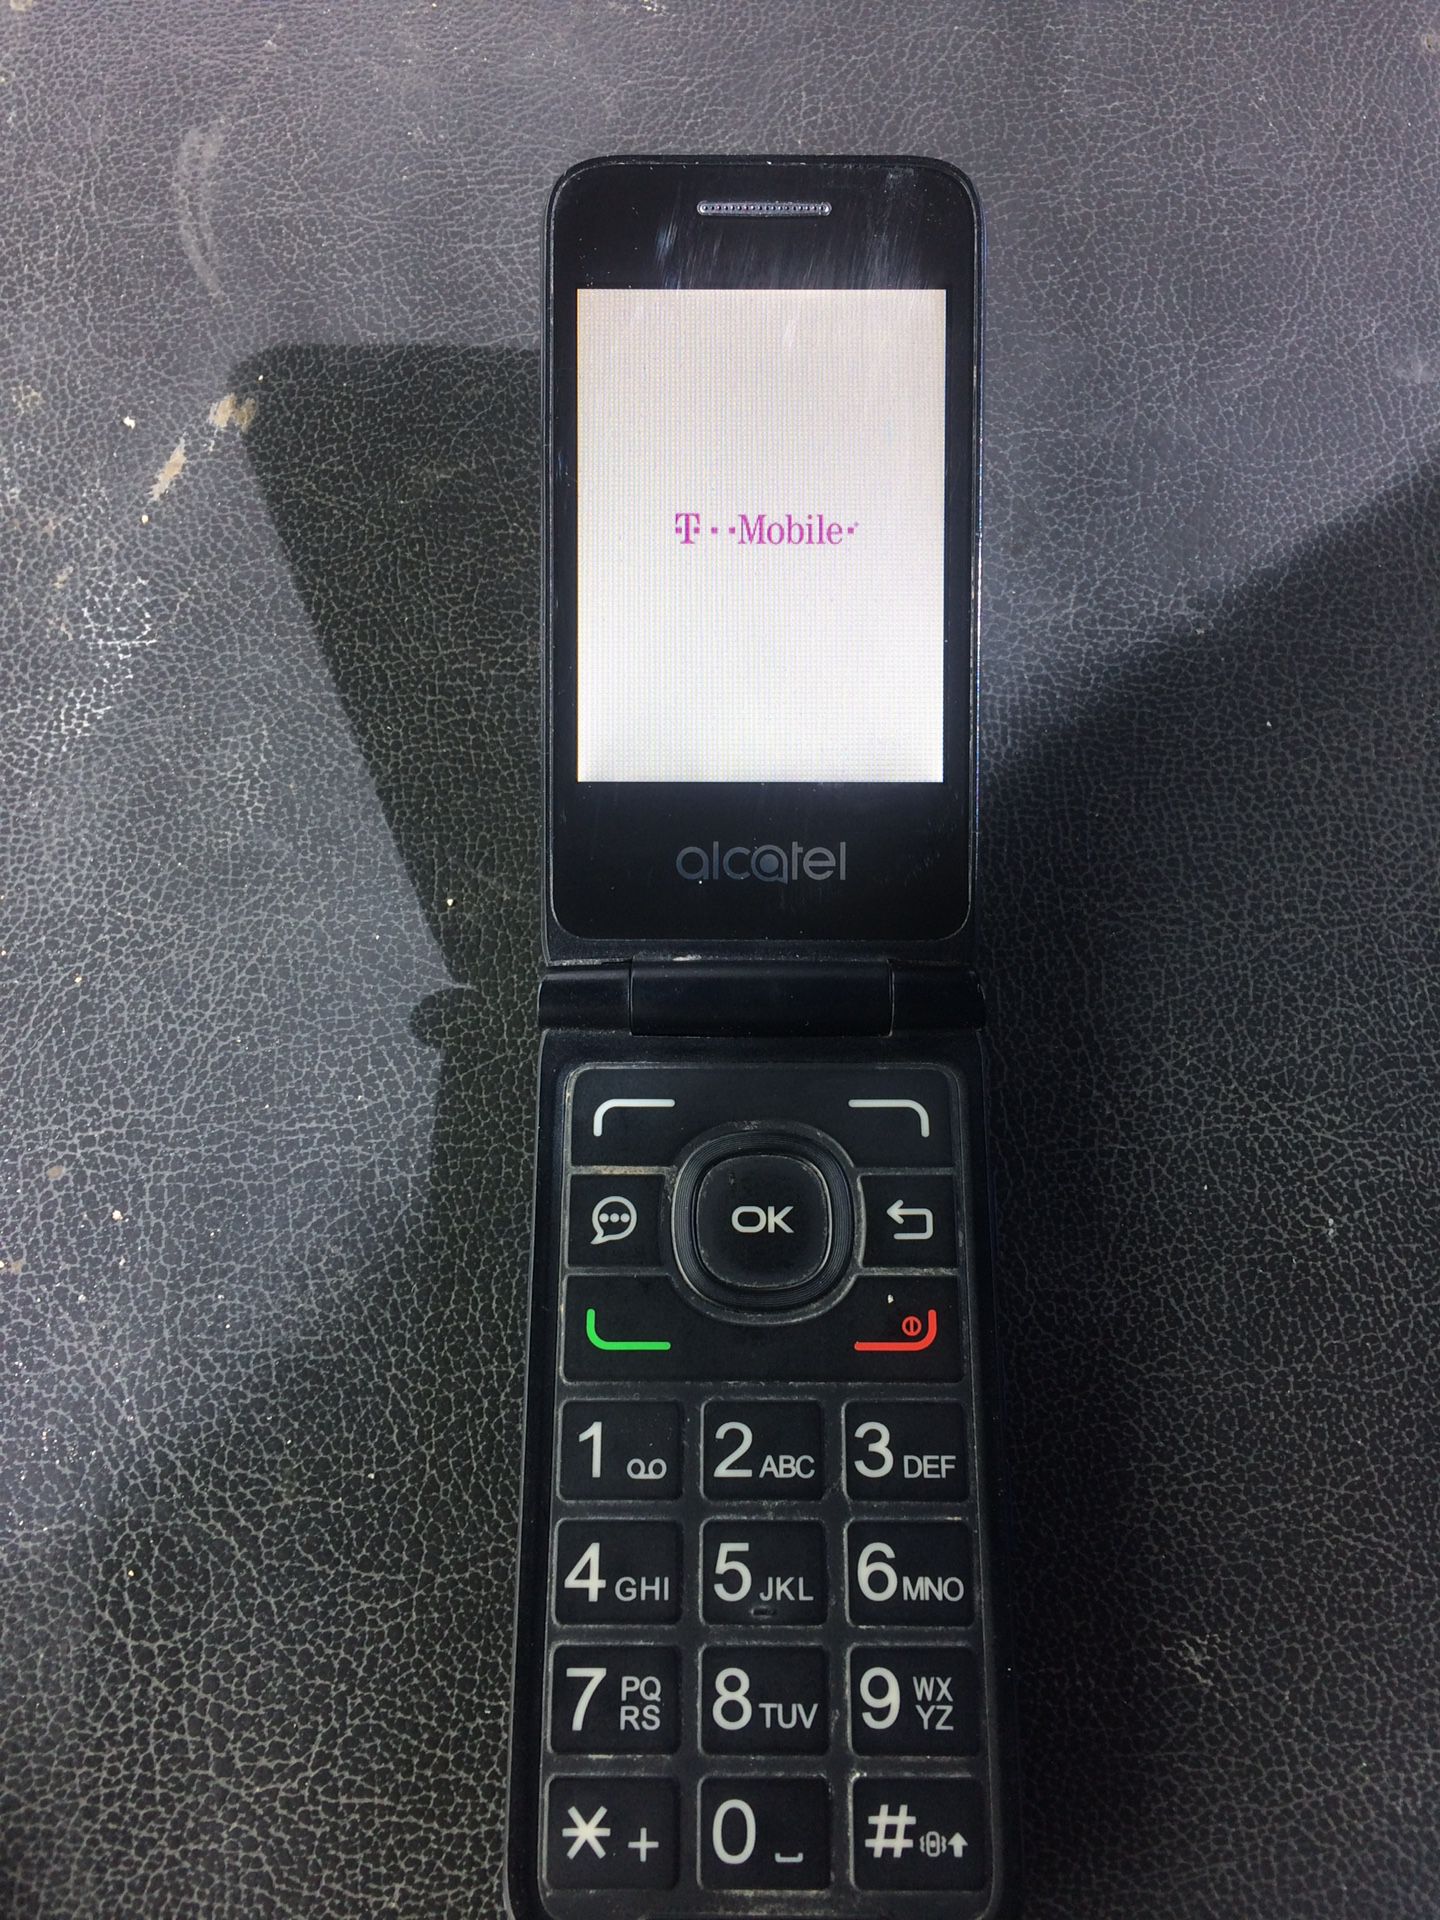 Alcatel flip phone. Unlocked